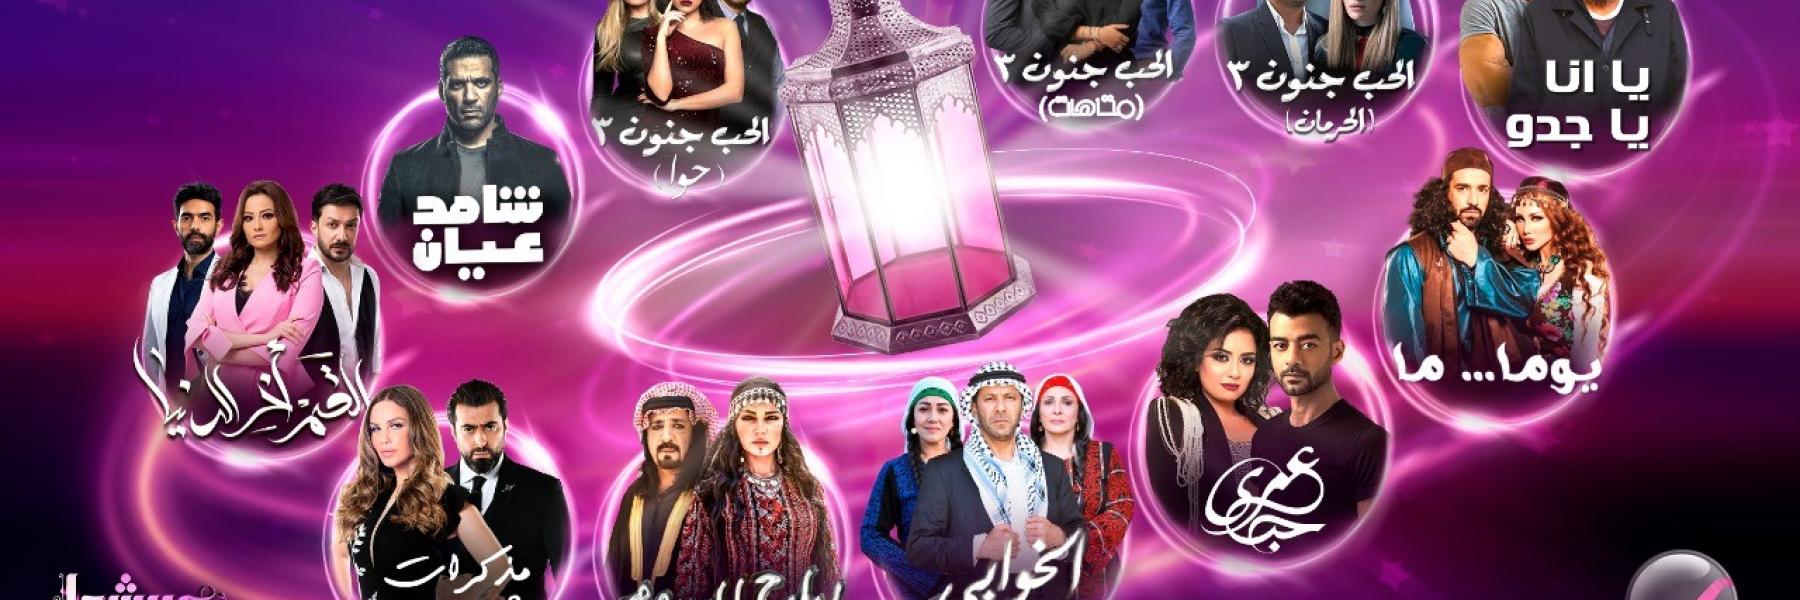 روتانا دراما تنافس بـ 8 مسلسلات في رمضان